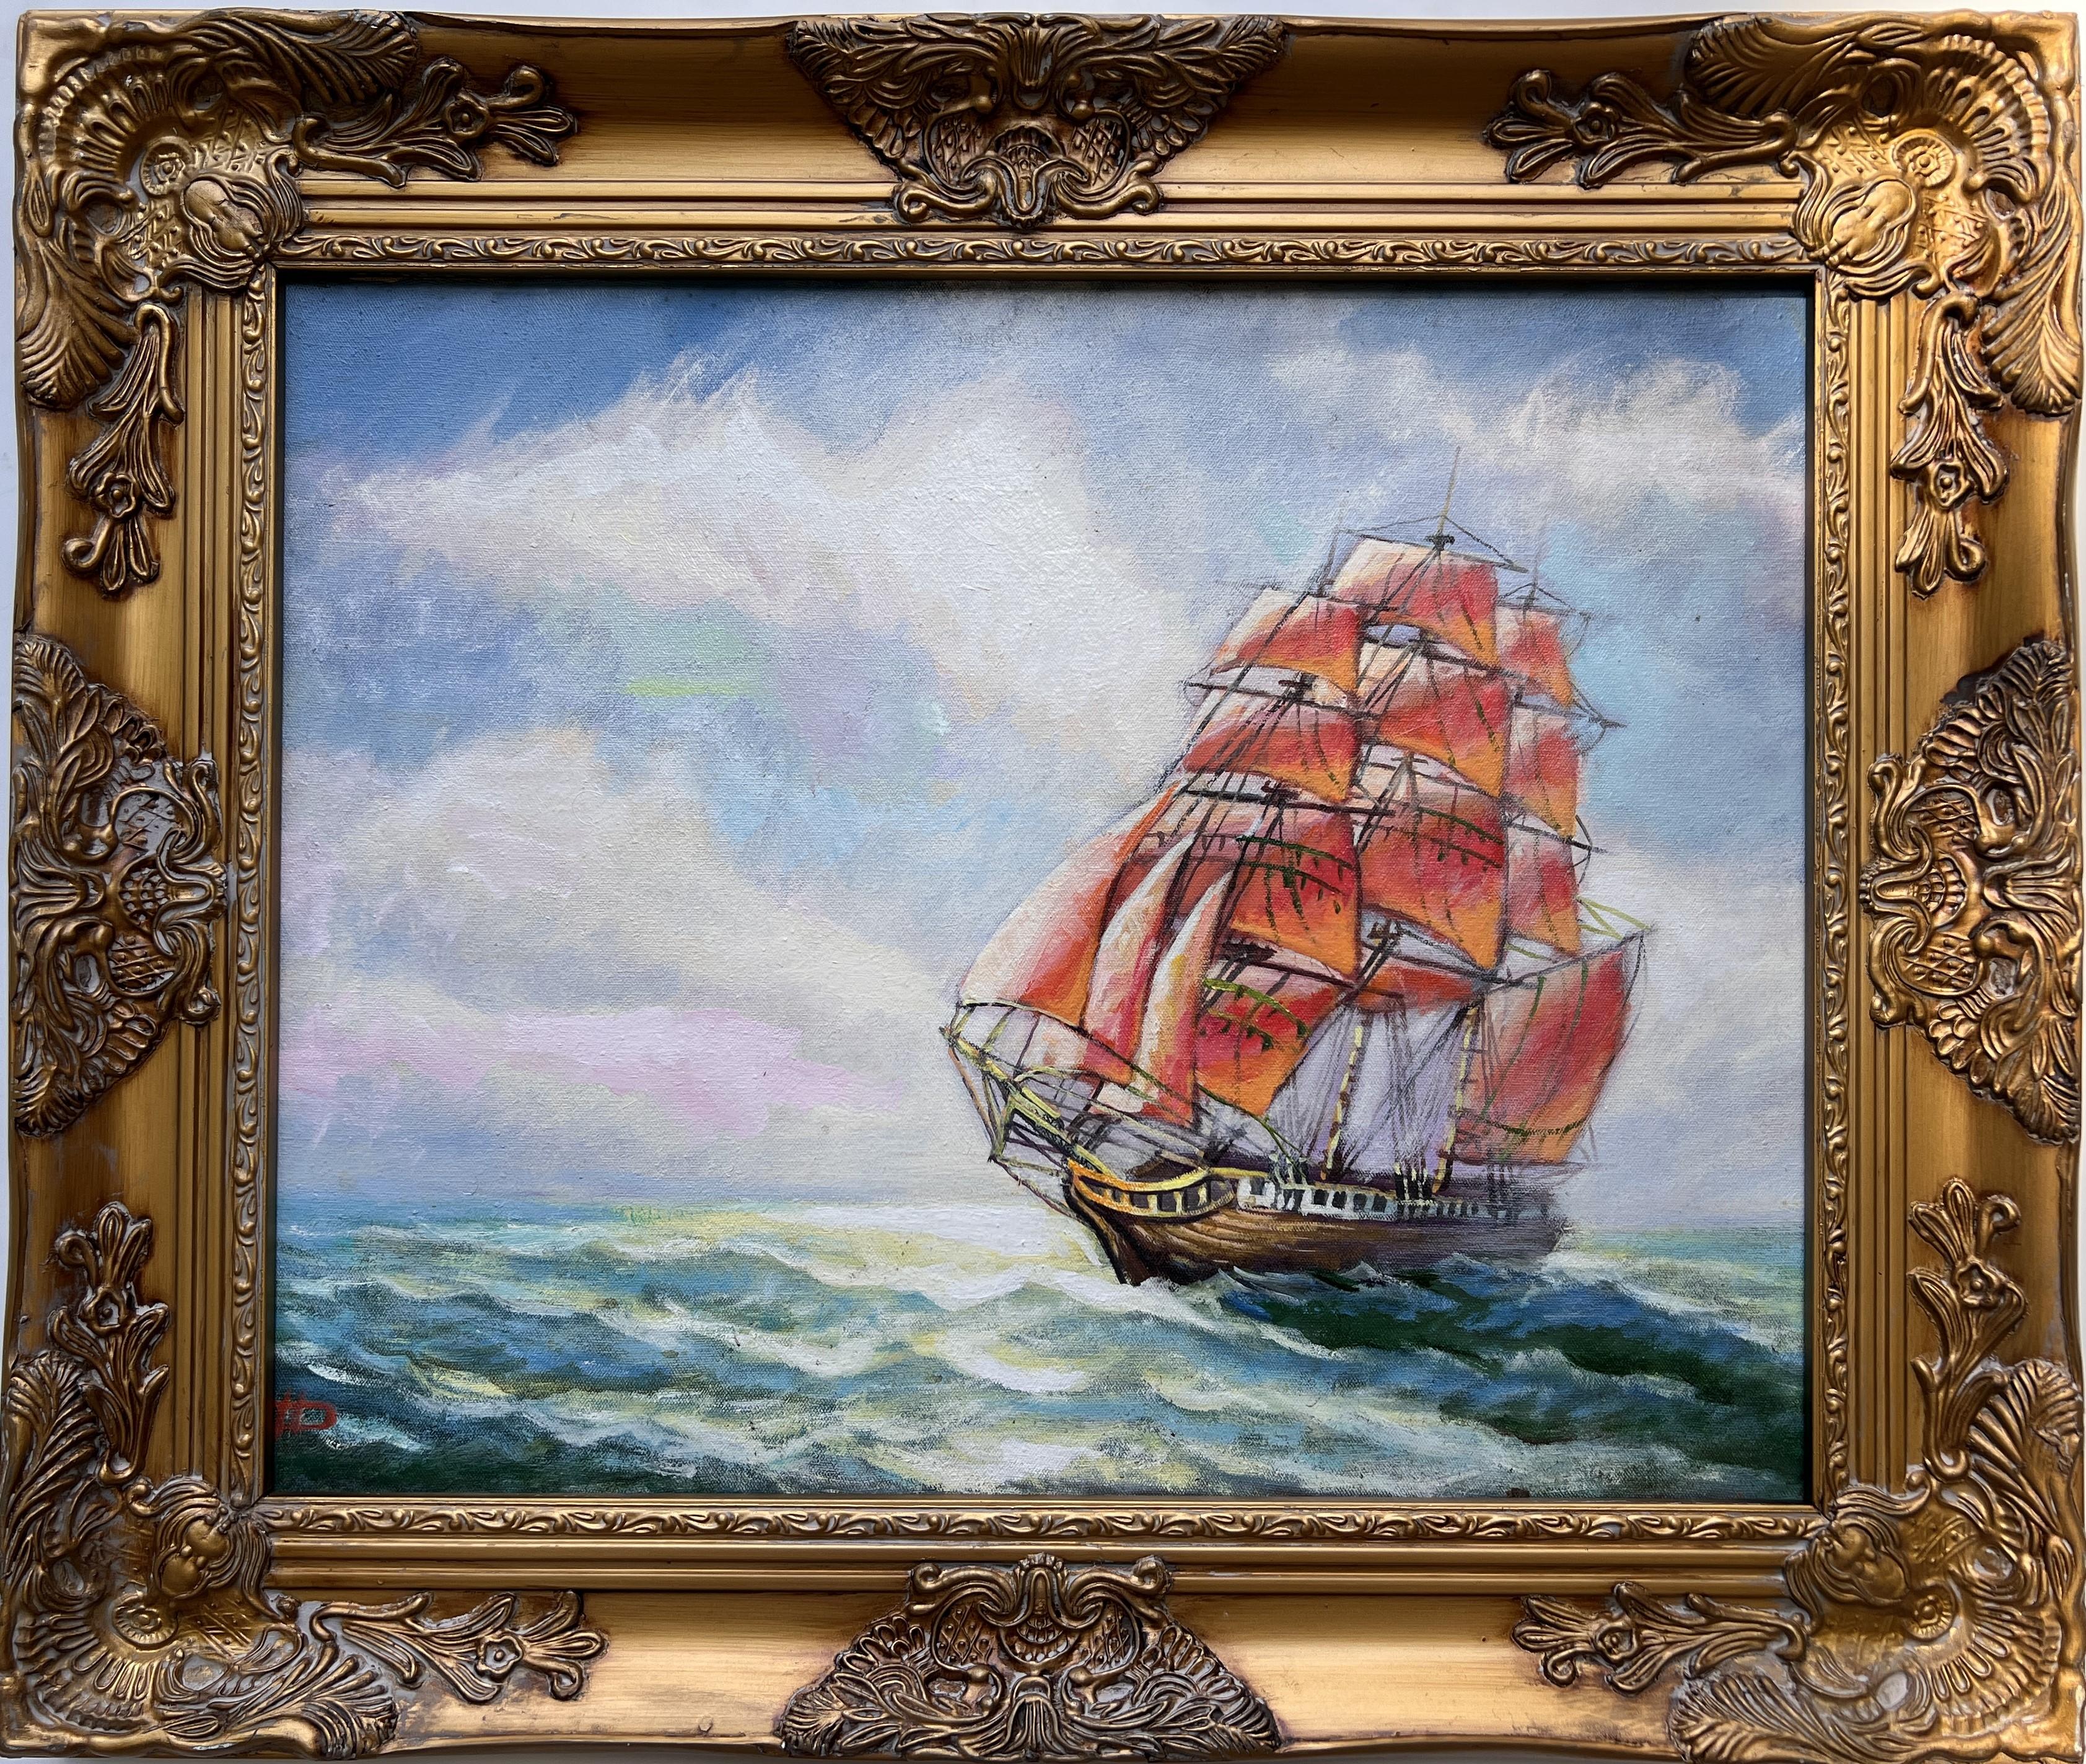 Nicolay Dobritsin  Landscape Painting - Artist Dobritsin Oil painting on canvas, seascape, Sailing ship, Framed